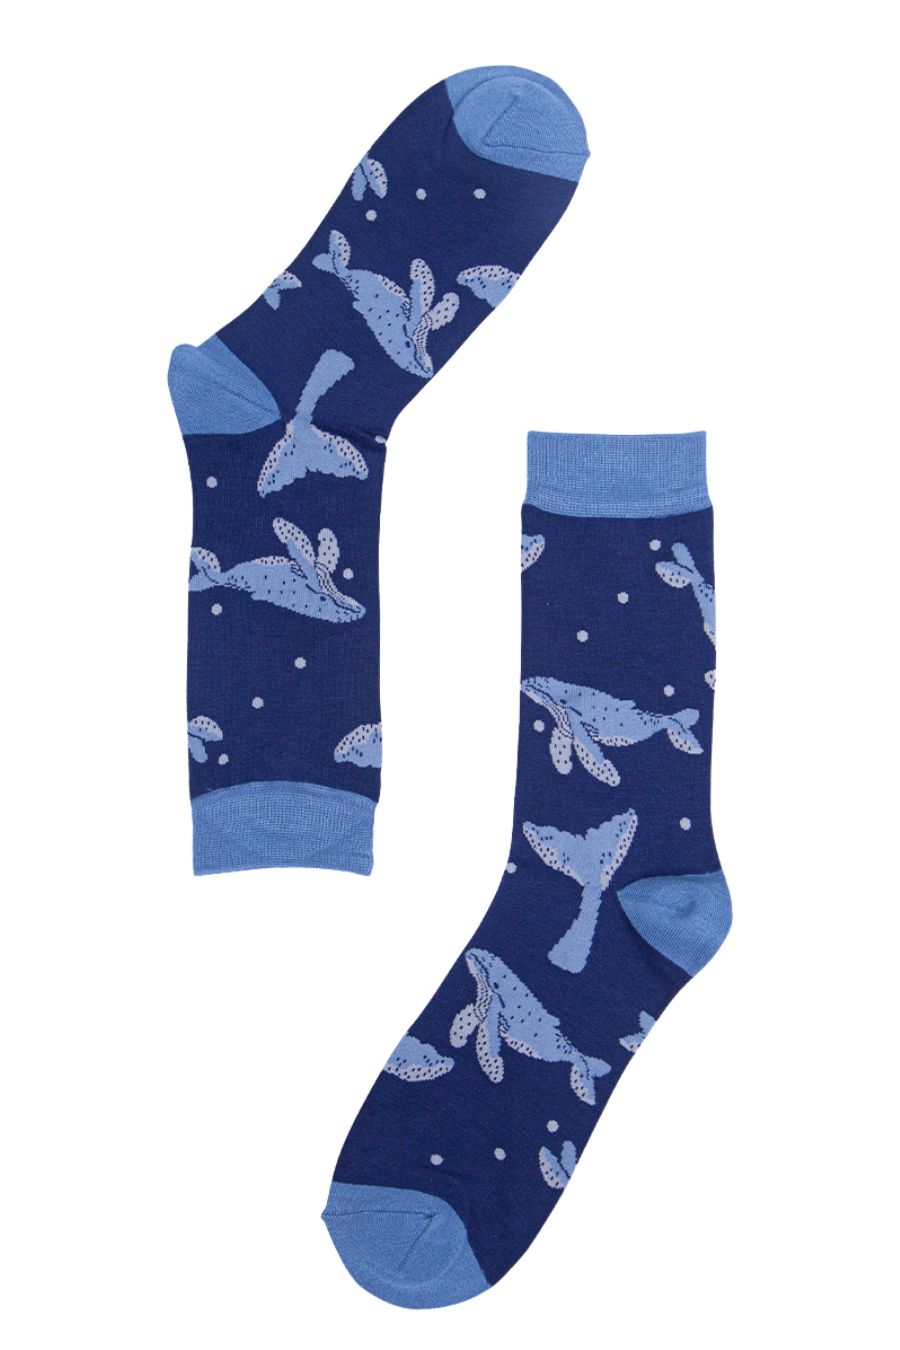 A pair of mens blue whale socks lying flat